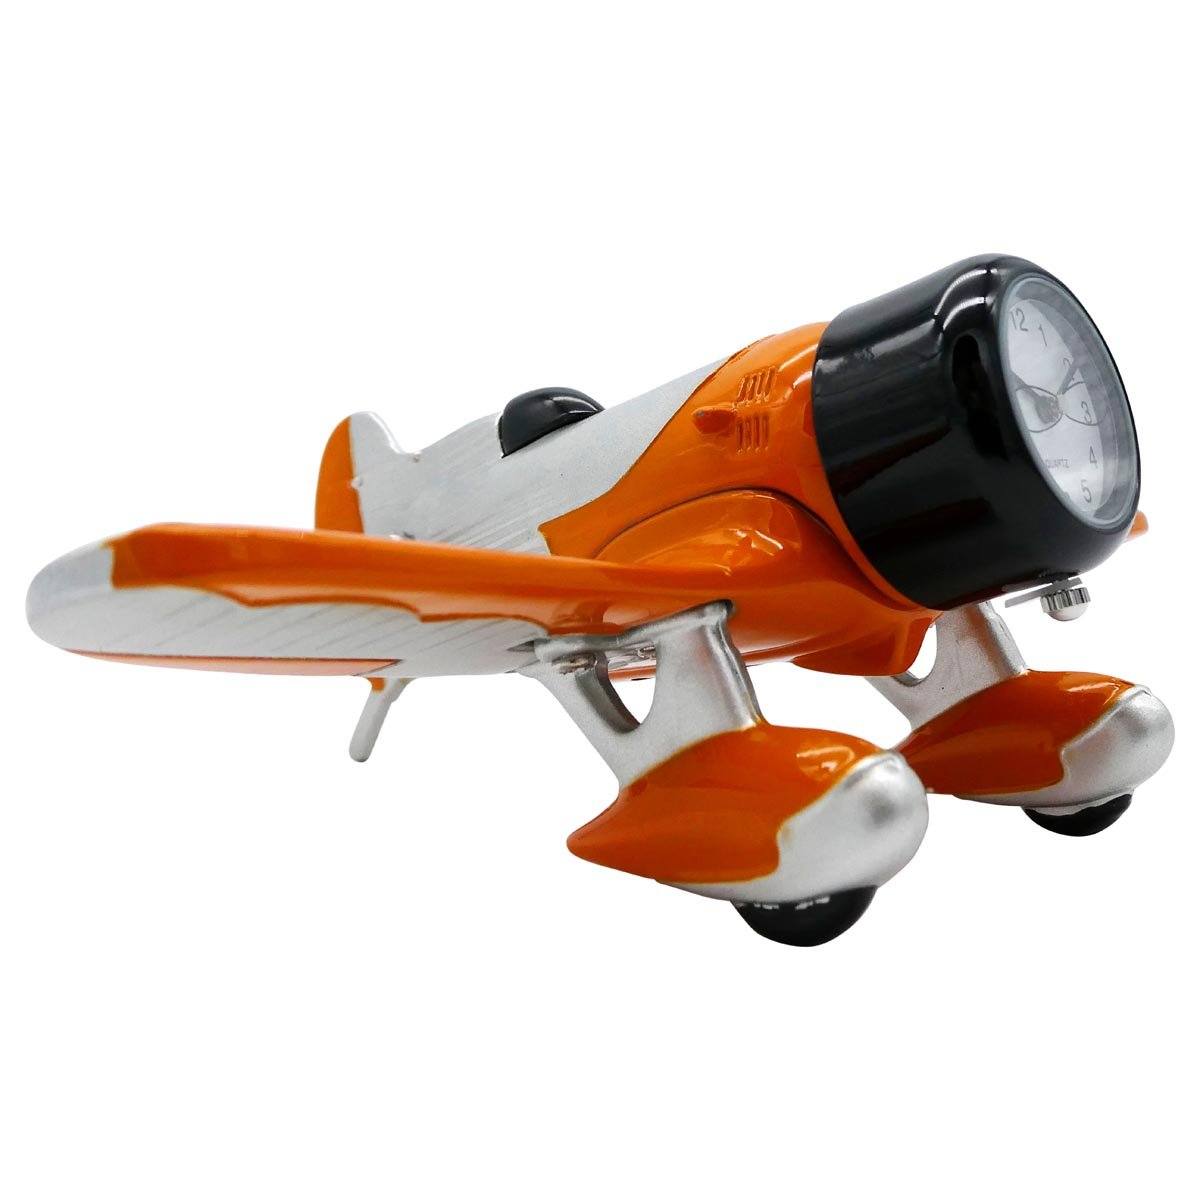 Pilot Toys Orange and Silver Gee Bee Desk Clock - PilotMall.com